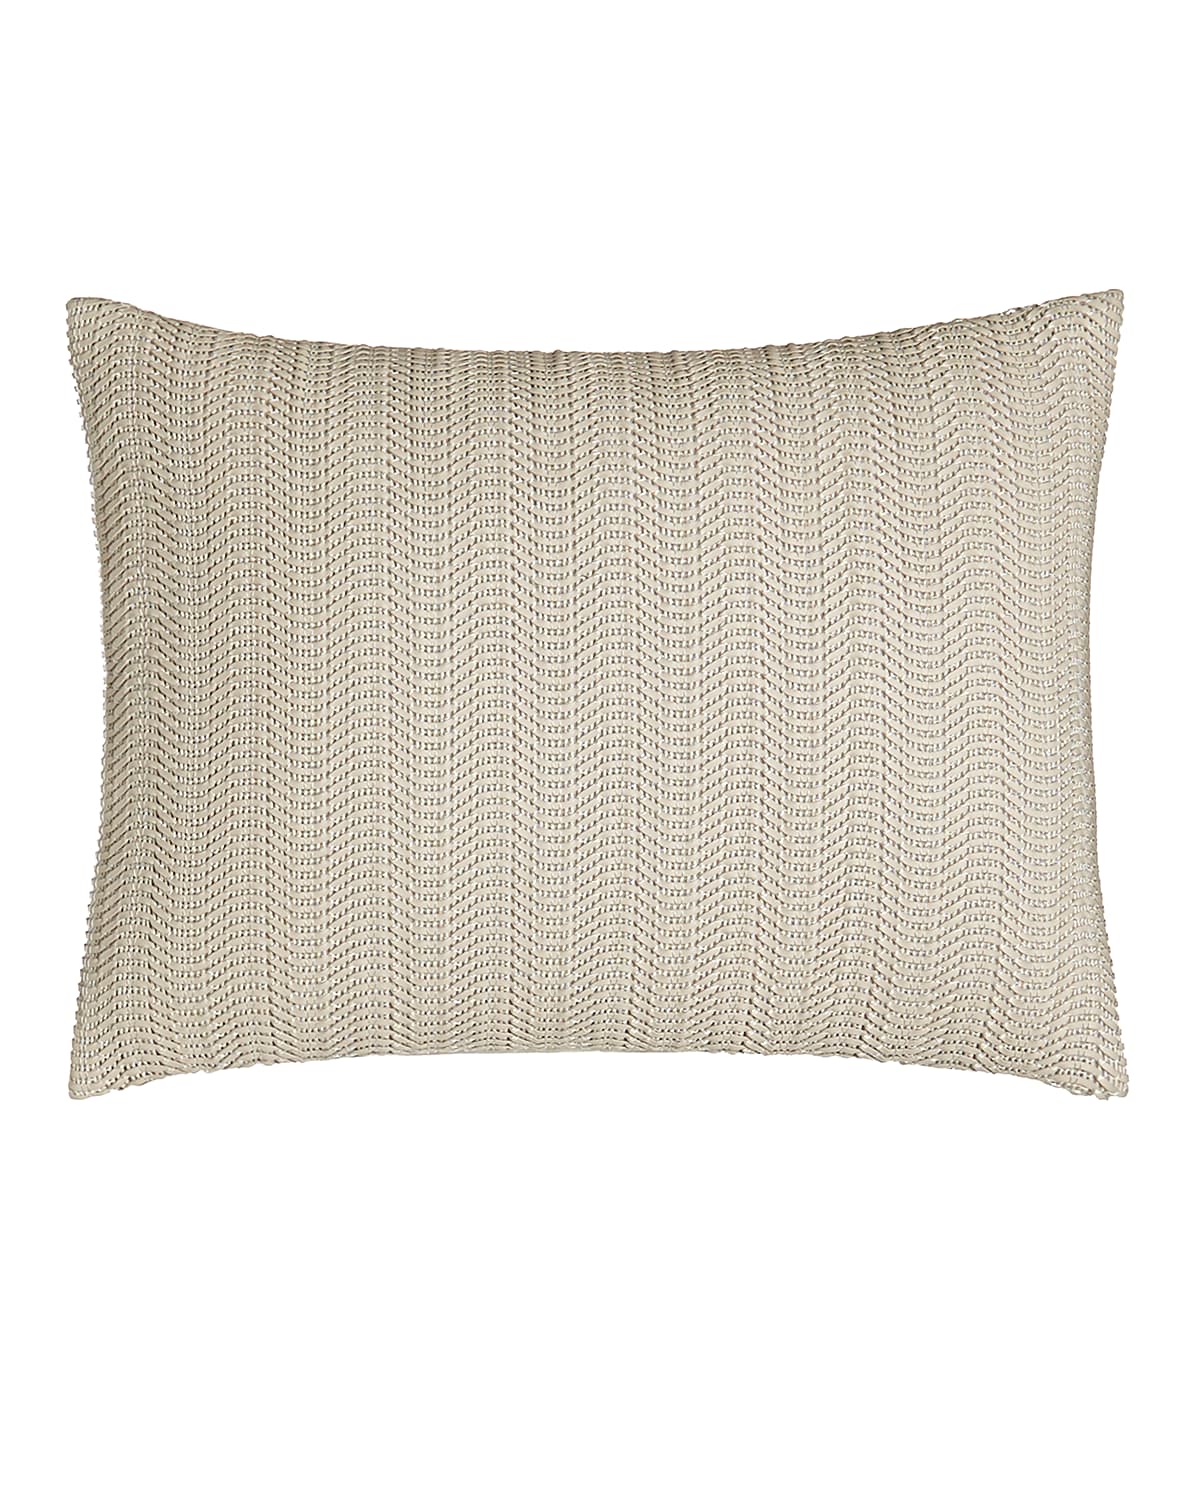 Image Donna Karan Home Moonscape Faux-Leather Pillow, 12" x 16"